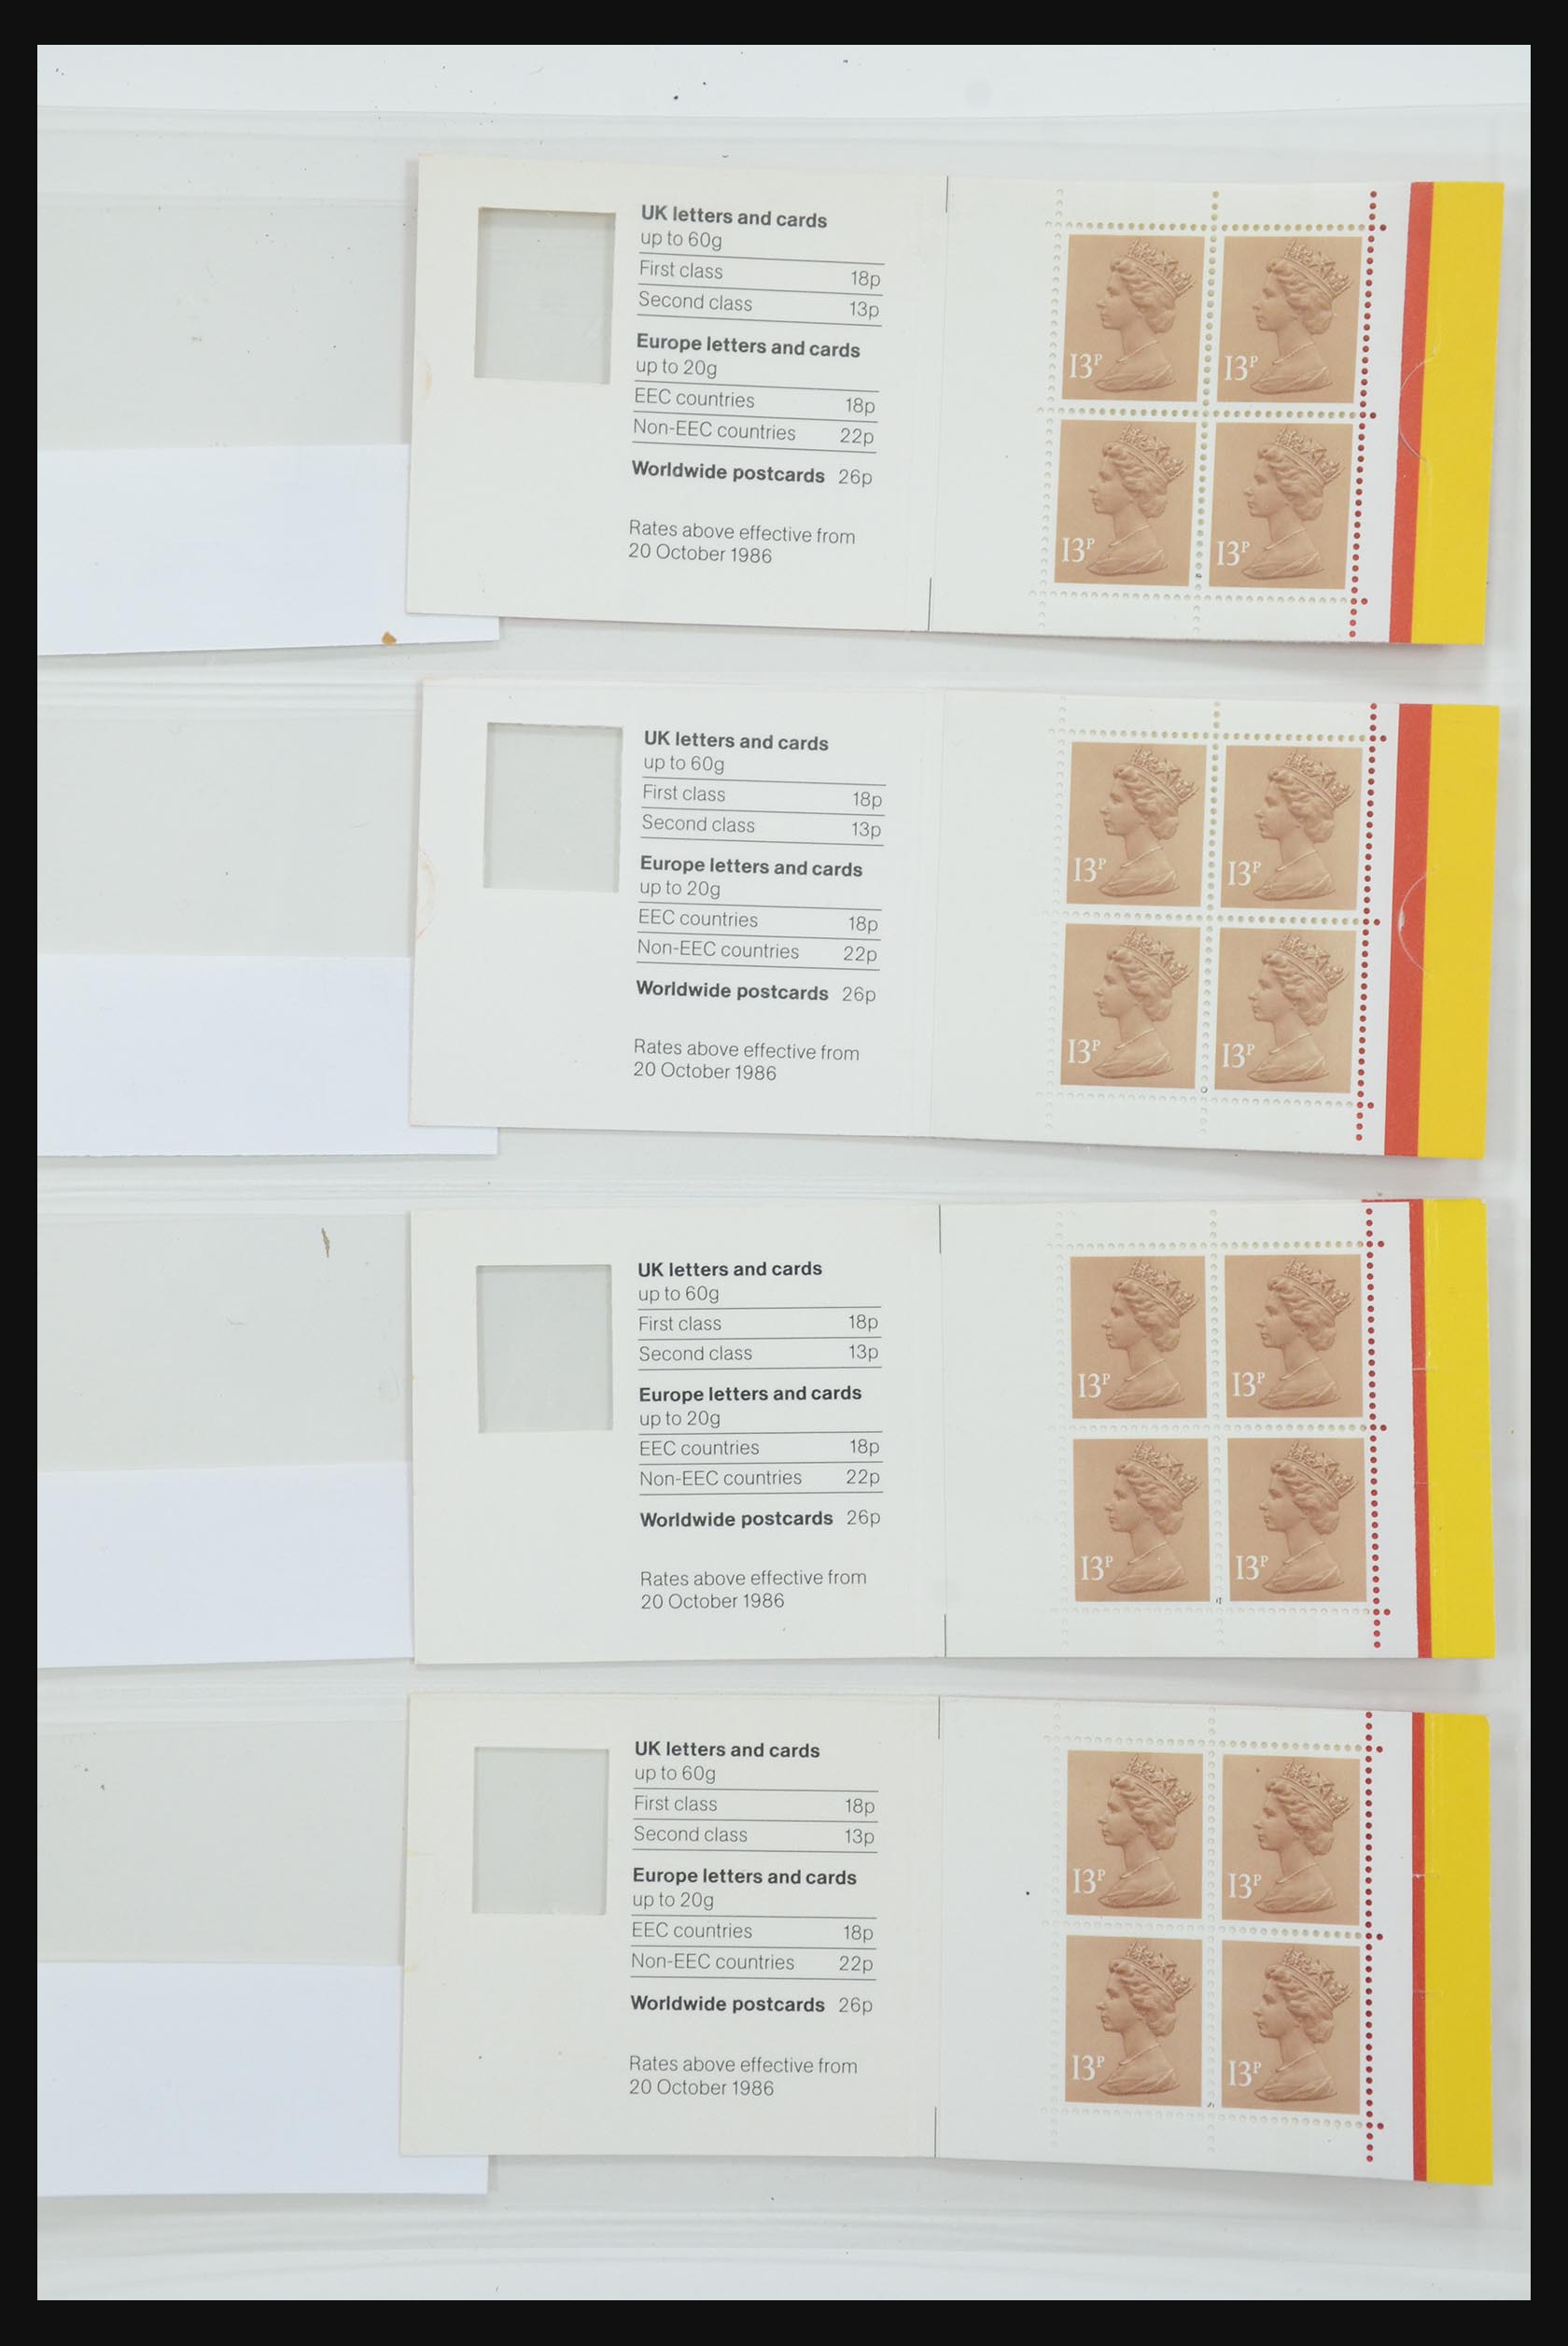 31959 002 - 31959 Great Britain stampbooklets 1987-2016!!